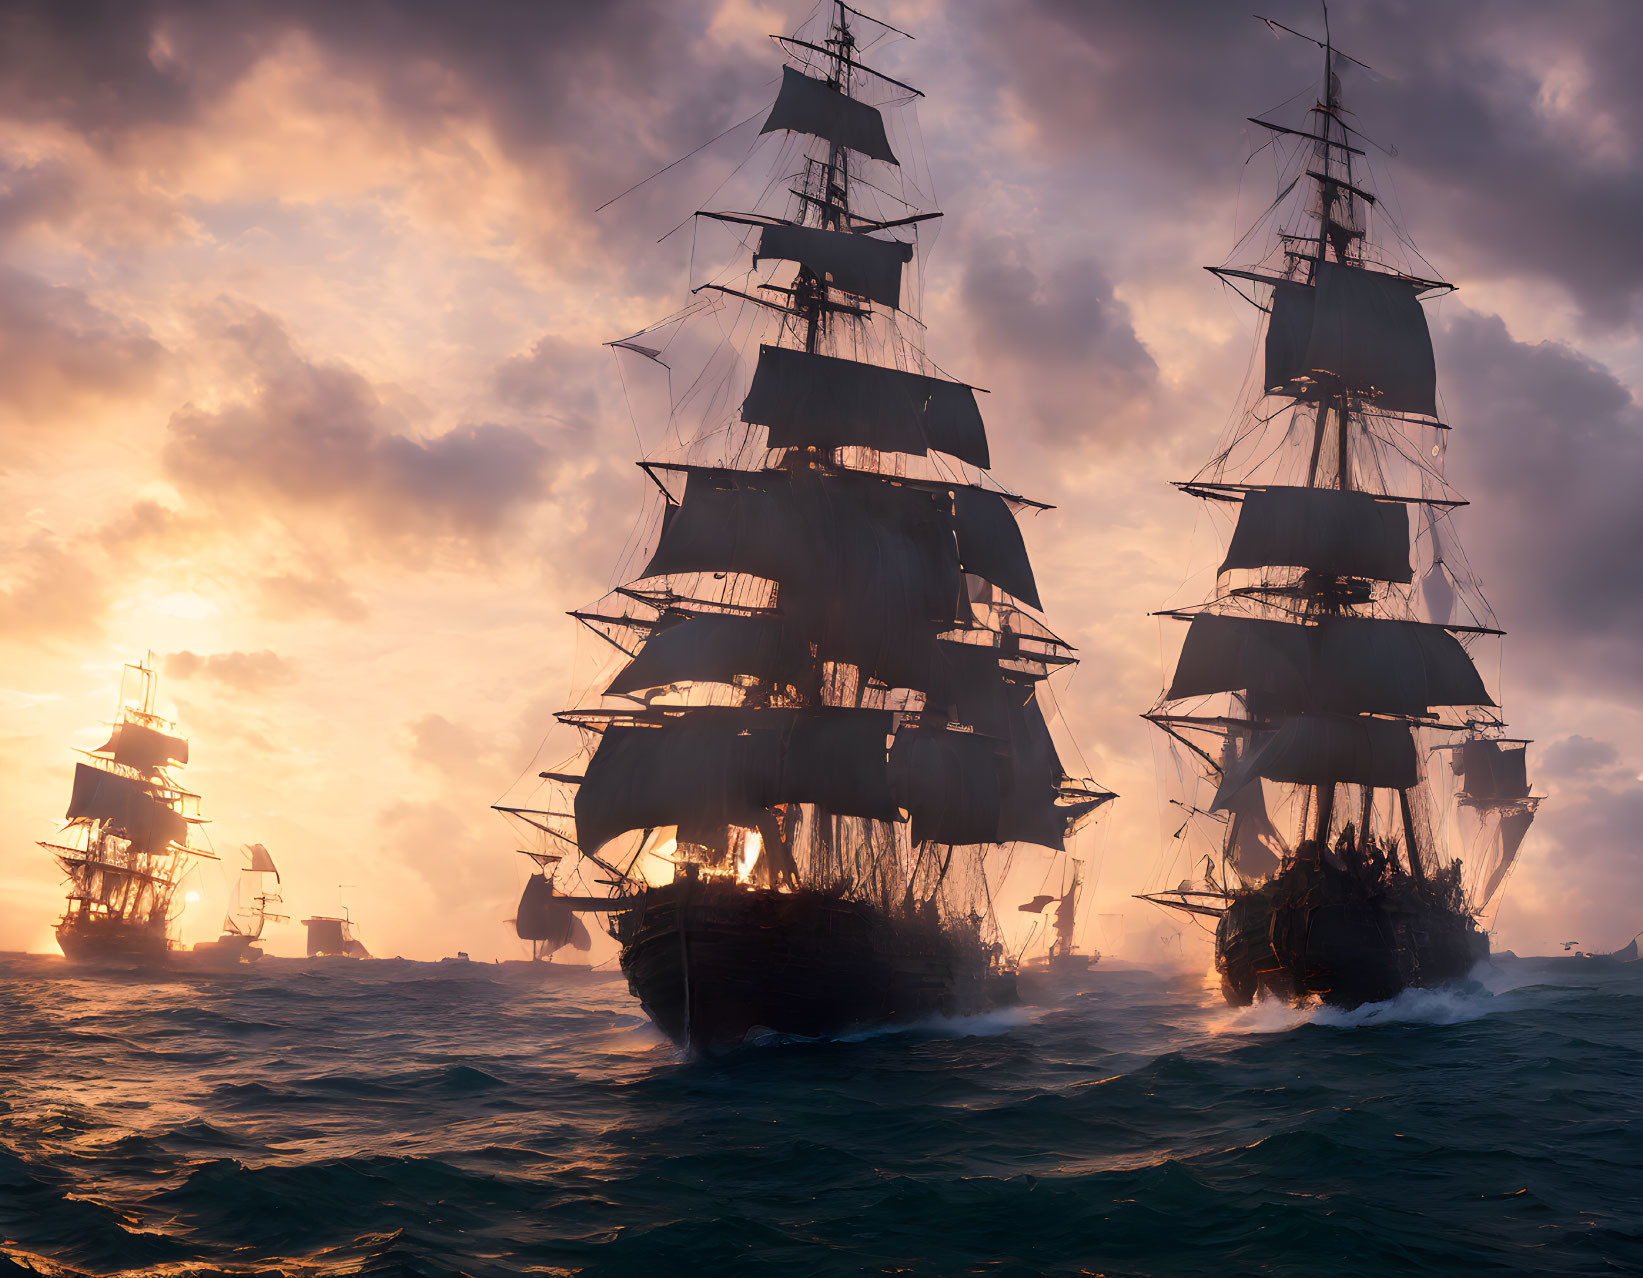 Majestic tall ships sailing through rough seas at sunset